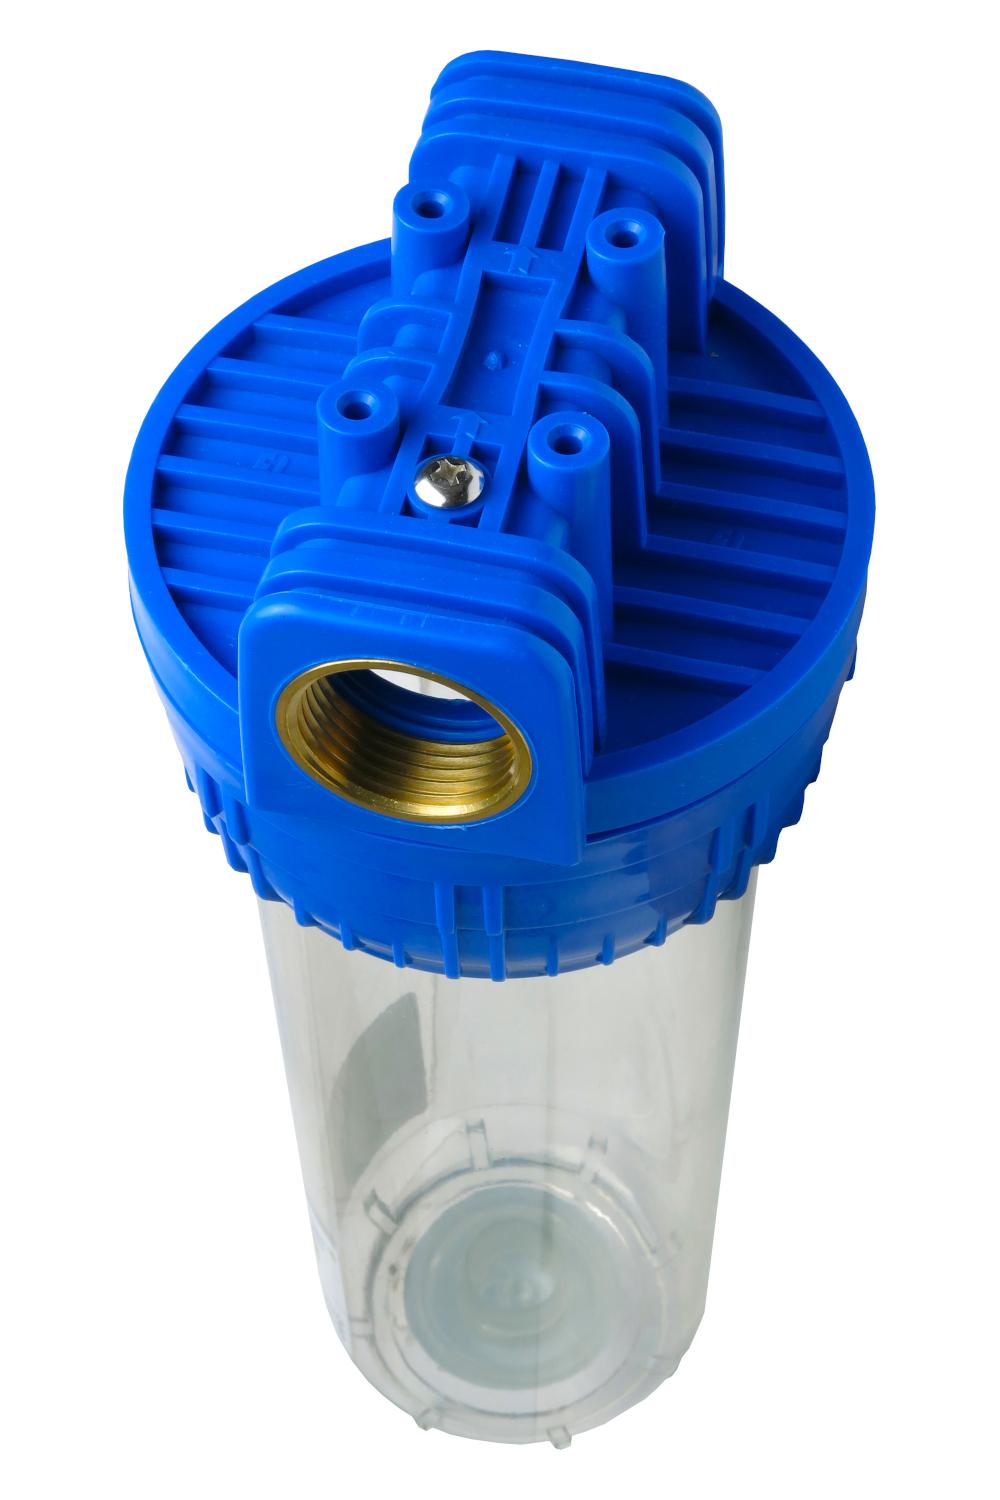 TWaLa Wasserfilter Gehäuse 3/4" Messing Anschluss transparent blau für 10" Filterpatronen